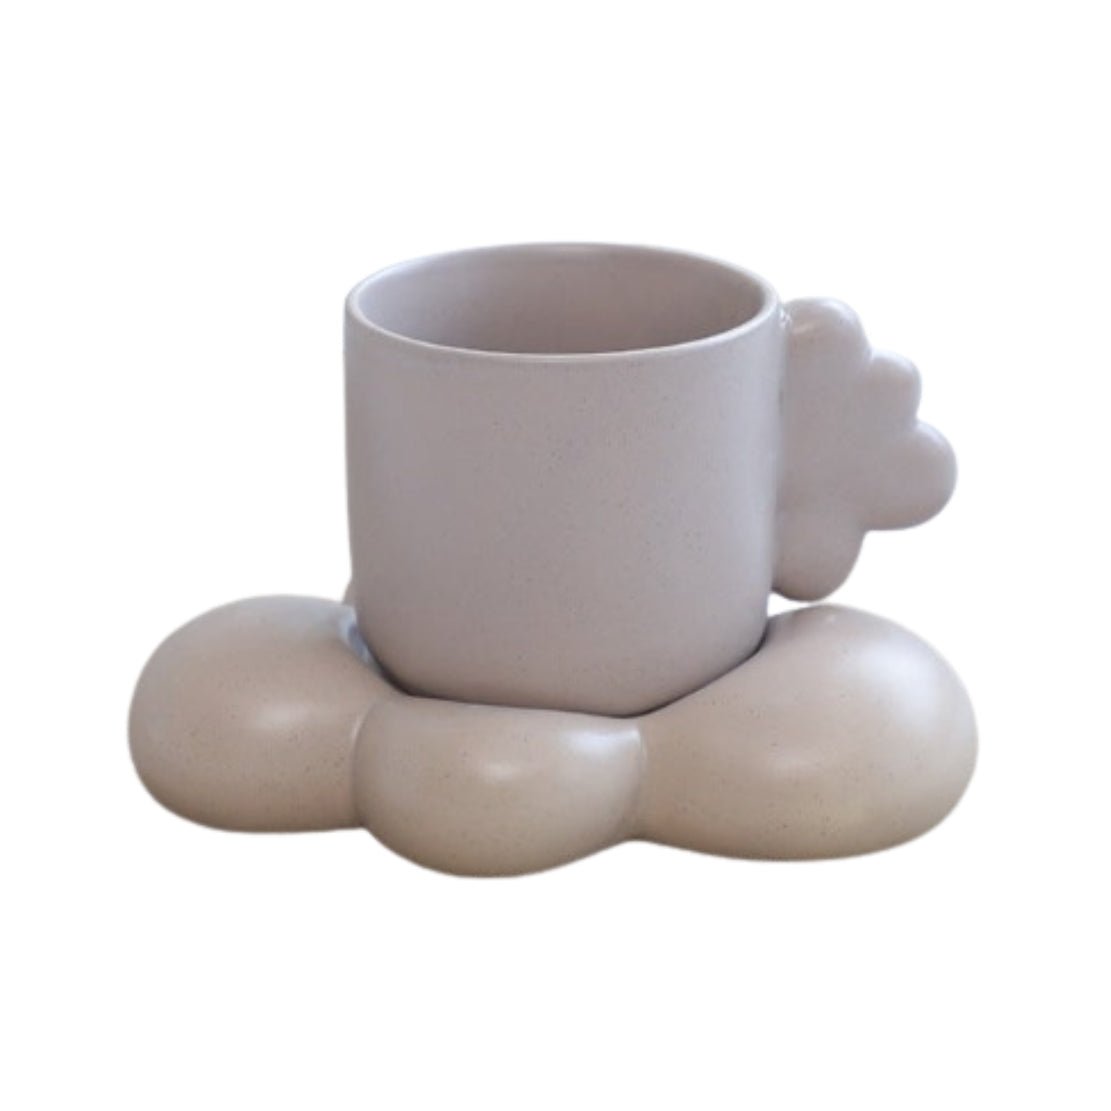 Beige grey'ish ceramic mug with cloud handle and saucer